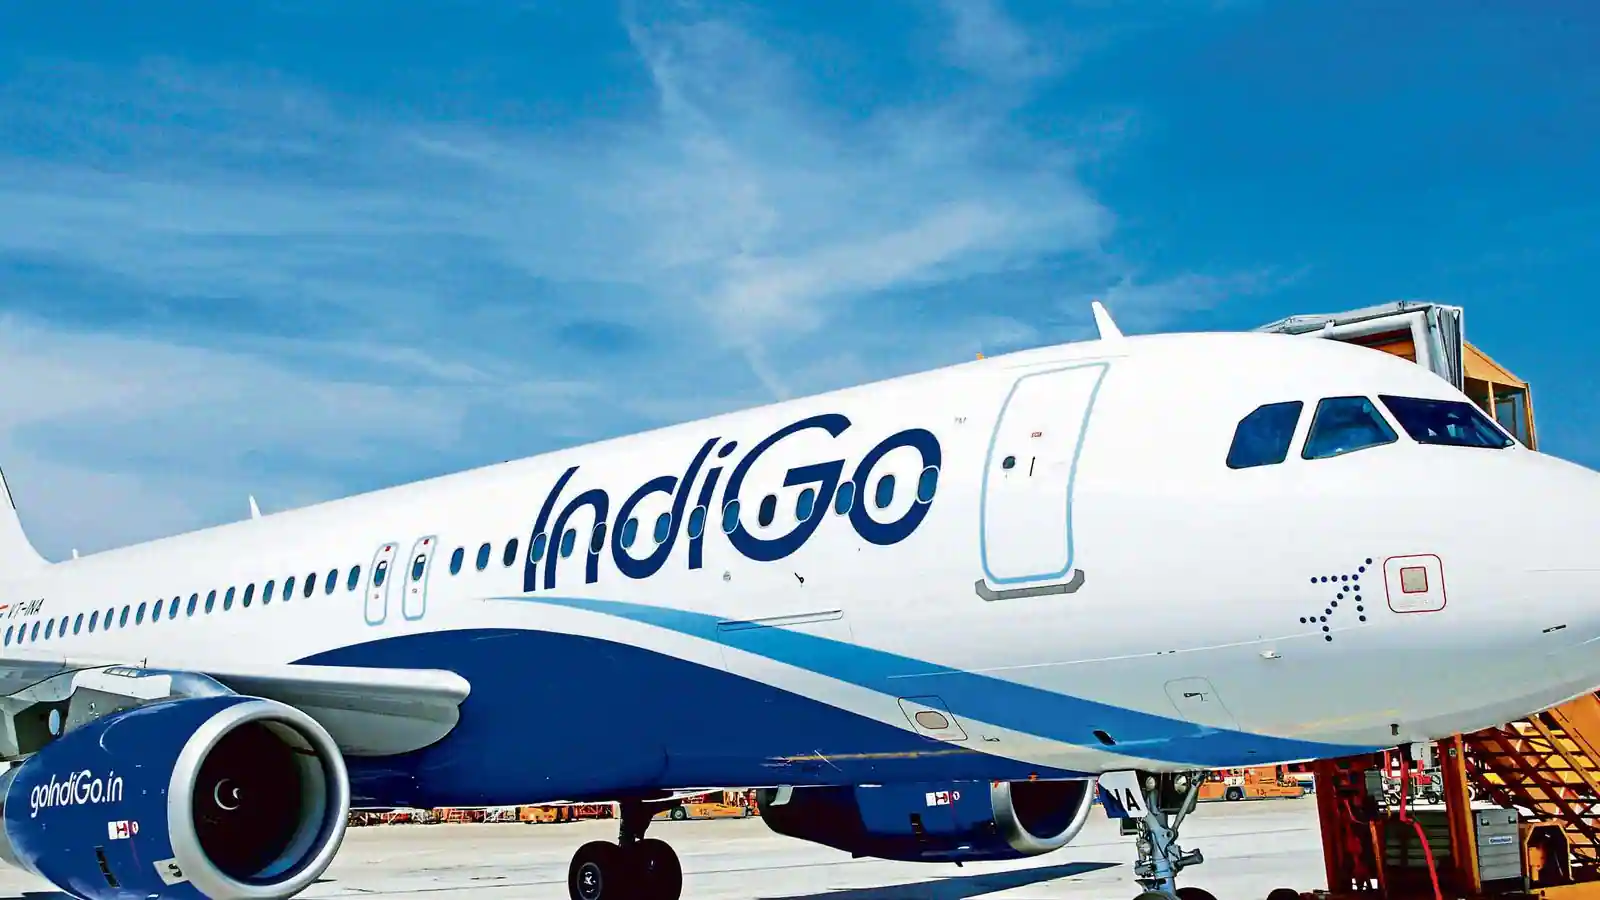 IndiGo Airlines prevents Divyang child from boarding flight IndiGo Airlines ਨੇ ਦਿਵਿਆਂਗ ਬੱਚੇ ਨੂੰ ਫਲਾਈਟ 'ਚ ਜਾਣ ਤੋਂ ਰੋਕਿਆ, ਮਚਿਆ ਬਵਾਲ